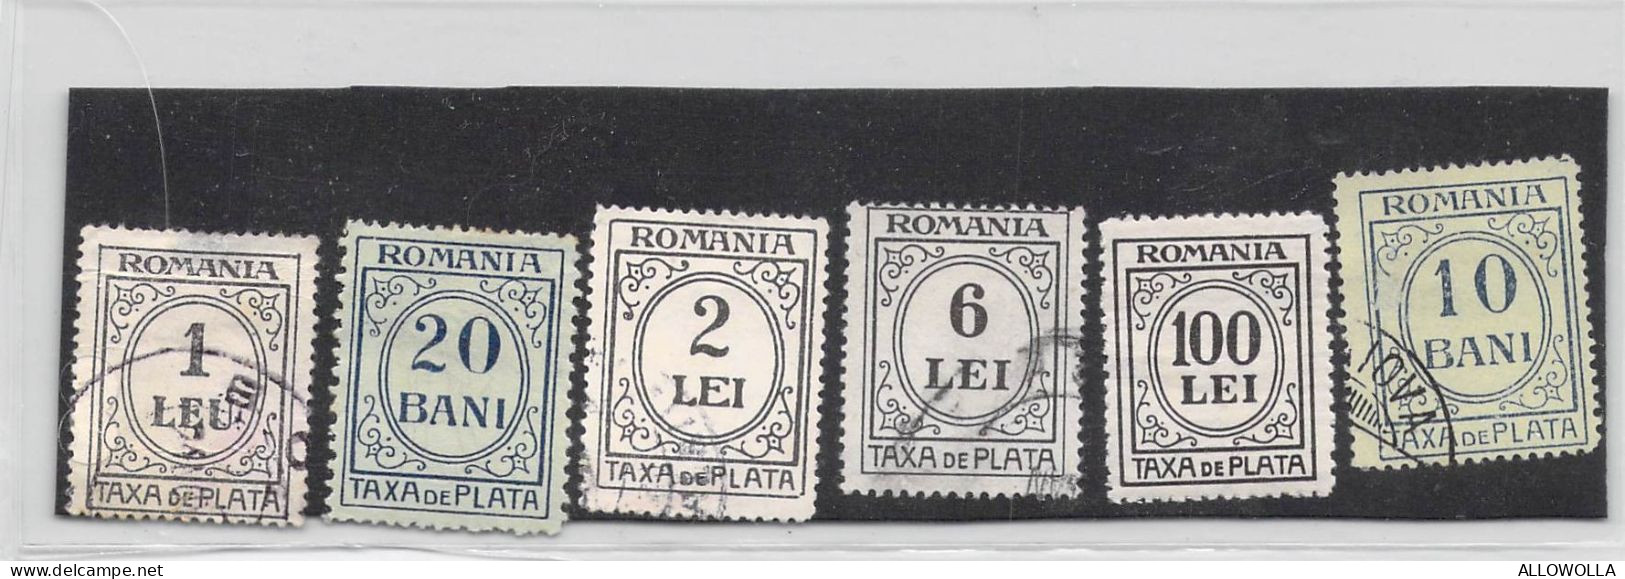 22186 " ROMANIA-TAXA DE PLATA-6 VALORI "  1 LEU E 20 BANI LINGUELLATI - Port Dû (Taxe)